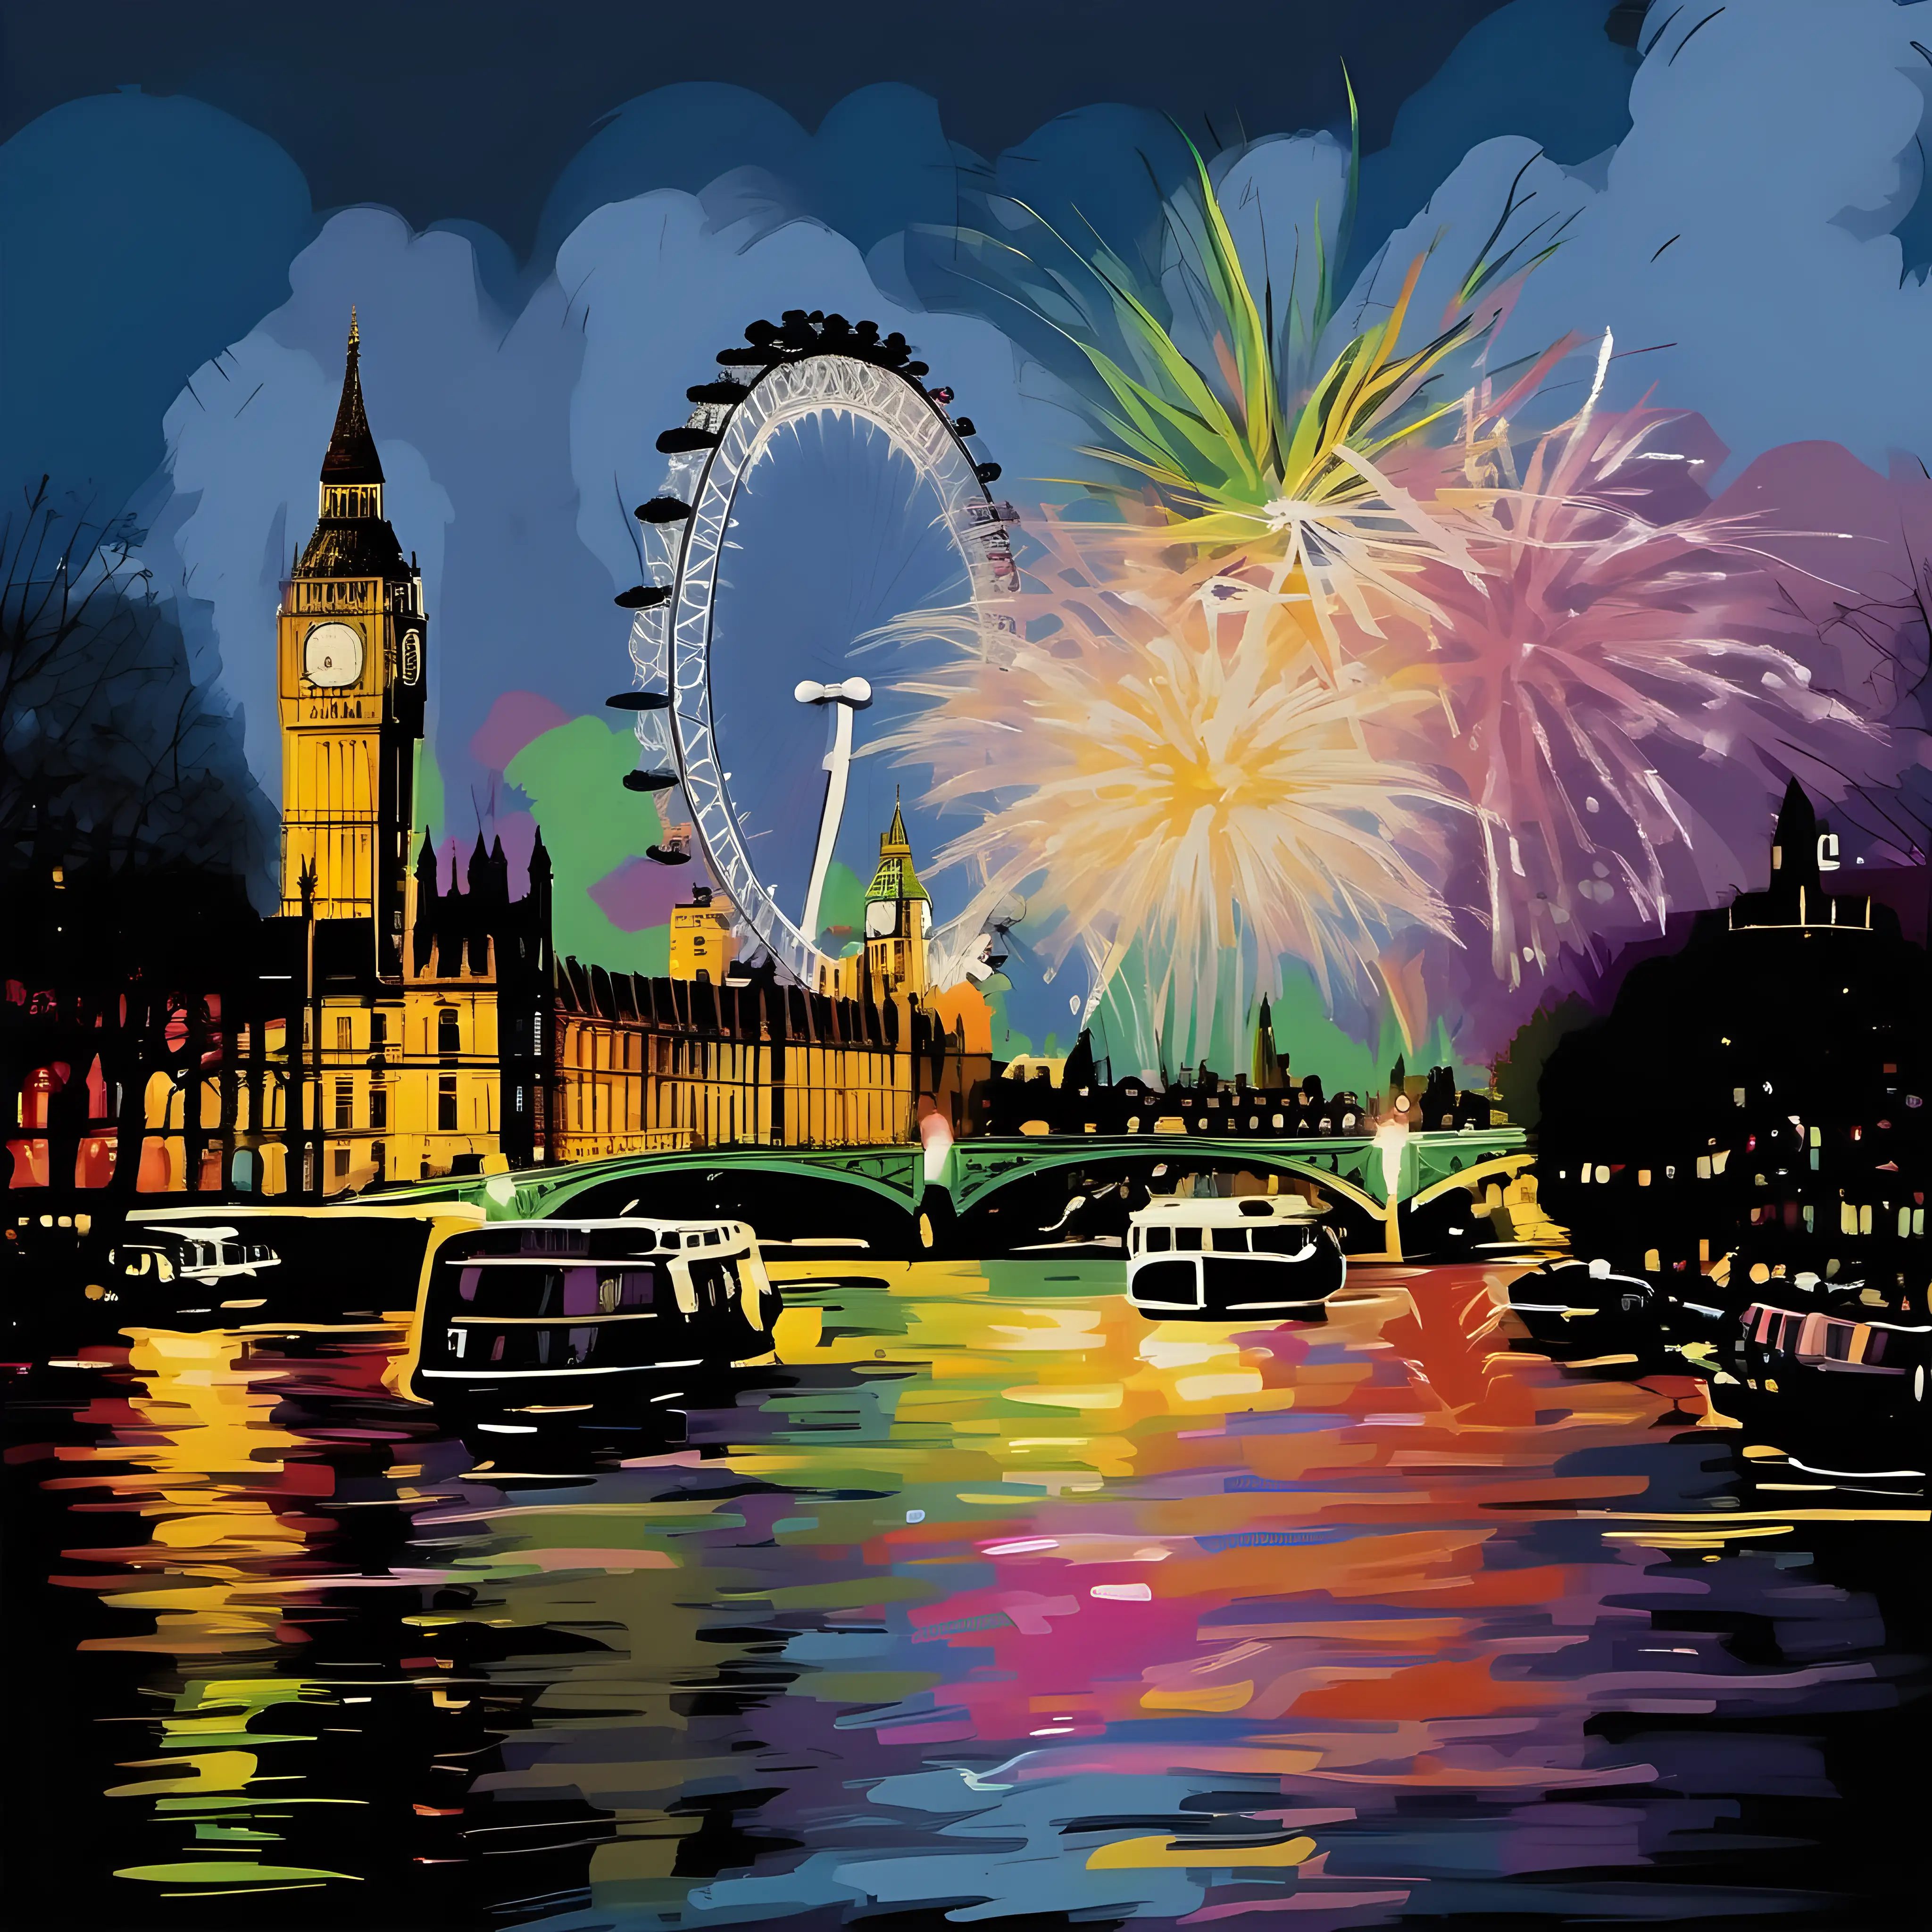 Vibrant New Years Eve Fireworks Illuminate London Skyline in Pop Art Splendor